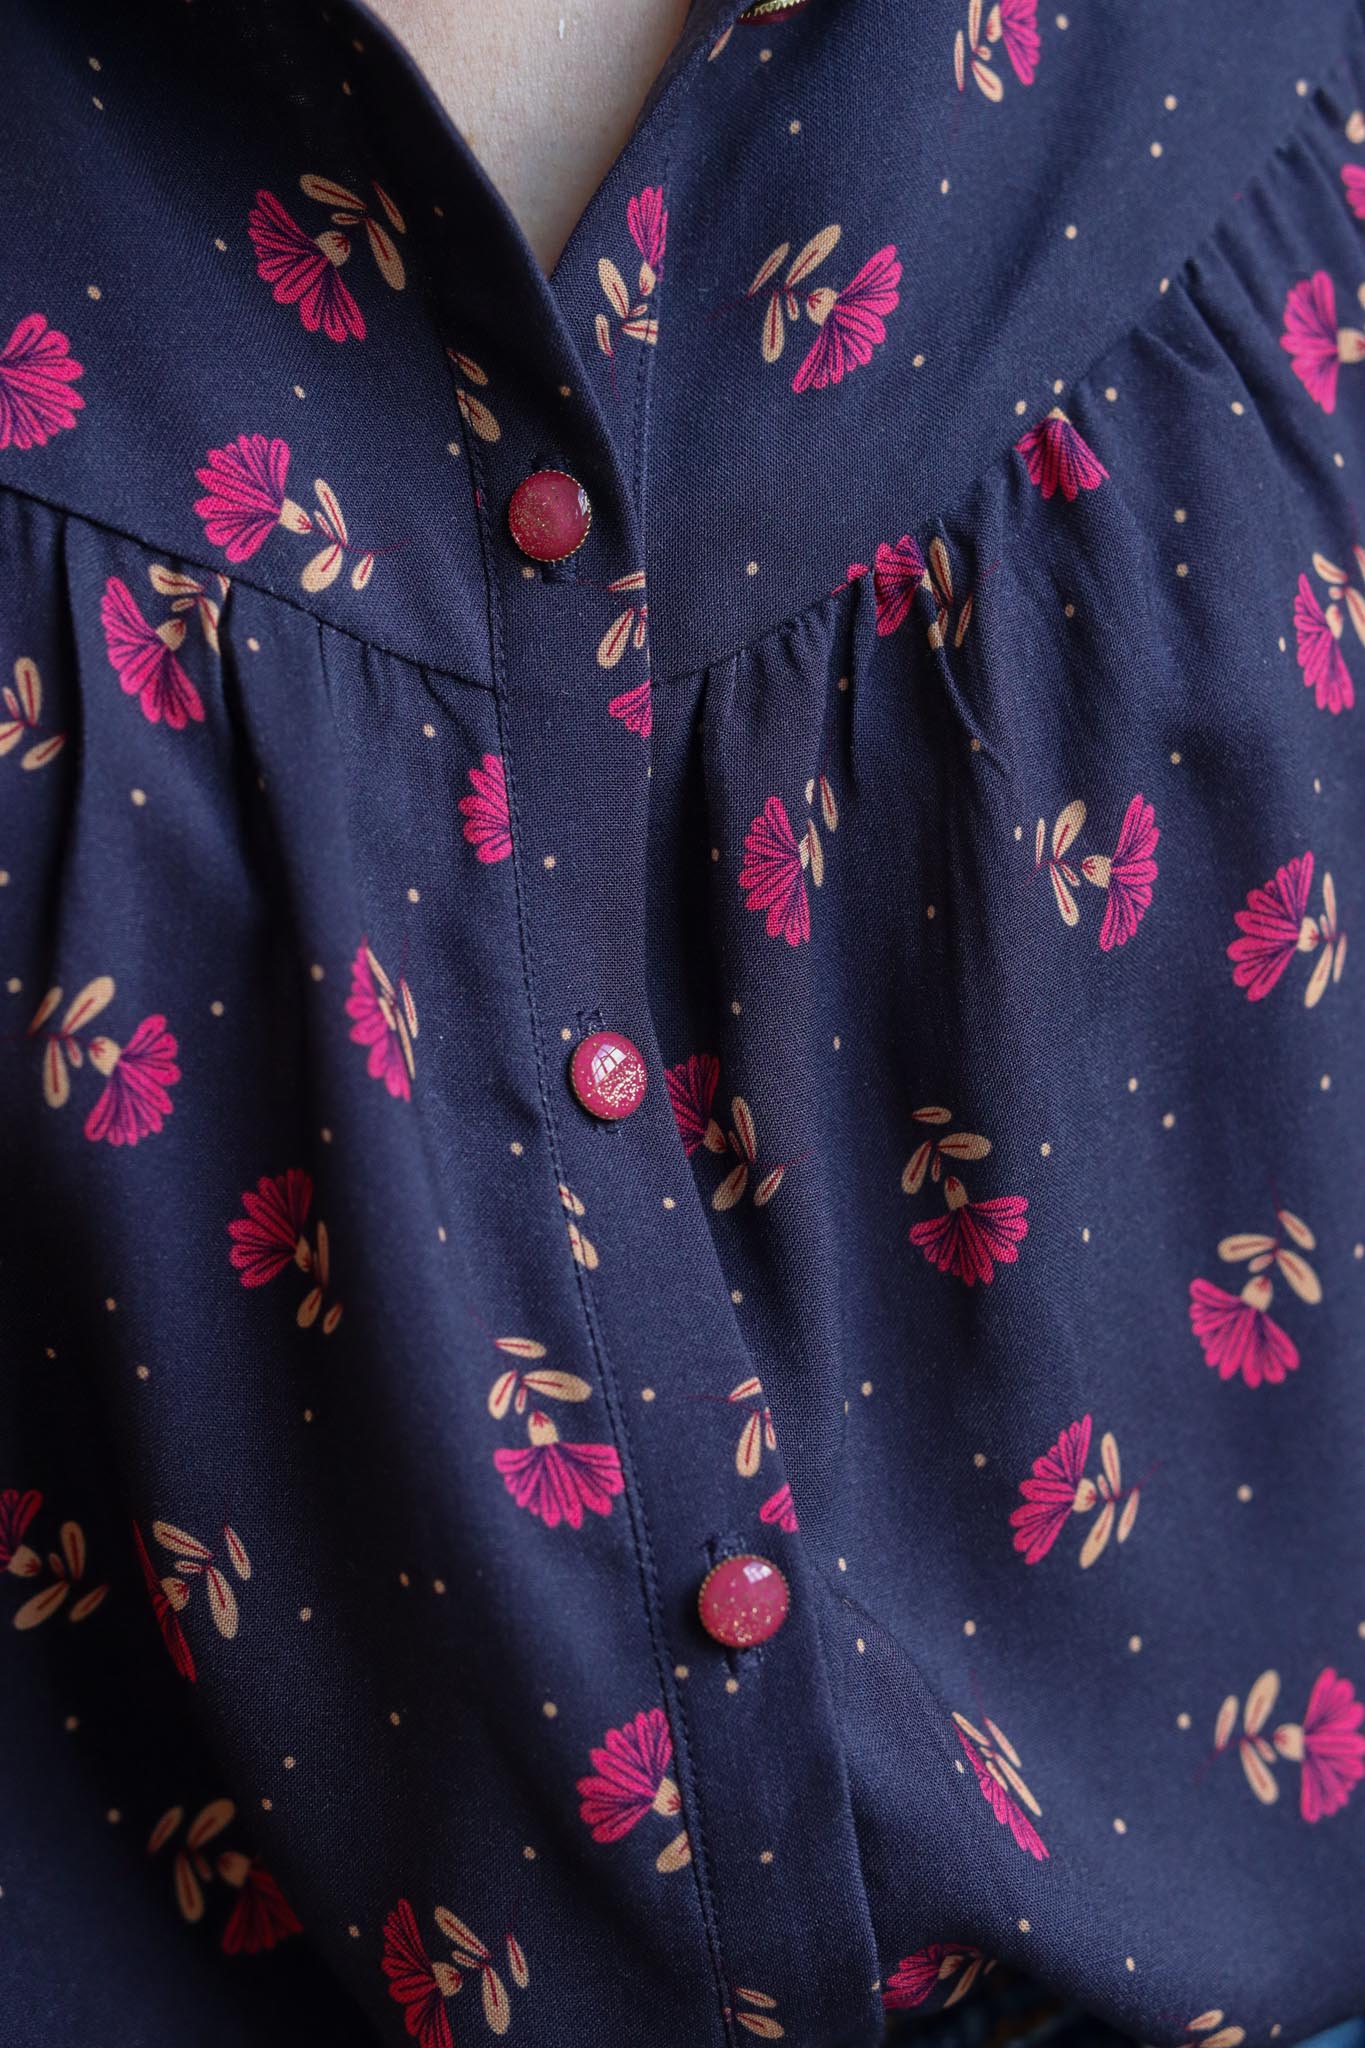 Sewing Kit - Pimpante Shirt in Berenice Ink Viscose Fabric